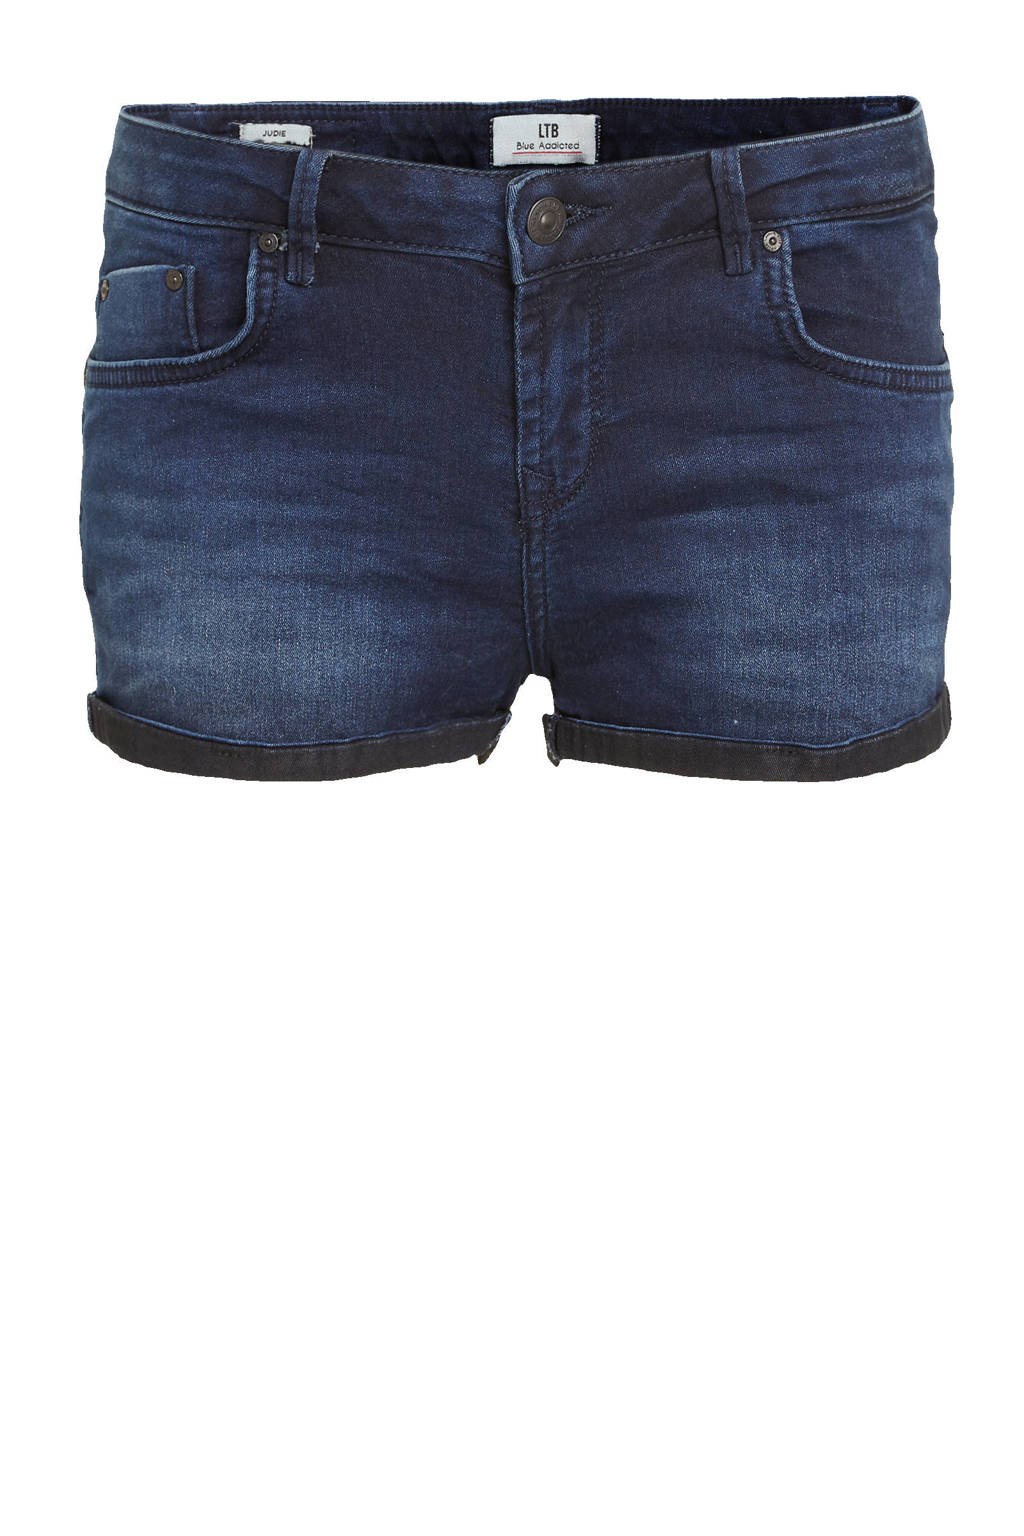 LTB jeans short Judie 53267 patrtiot blue